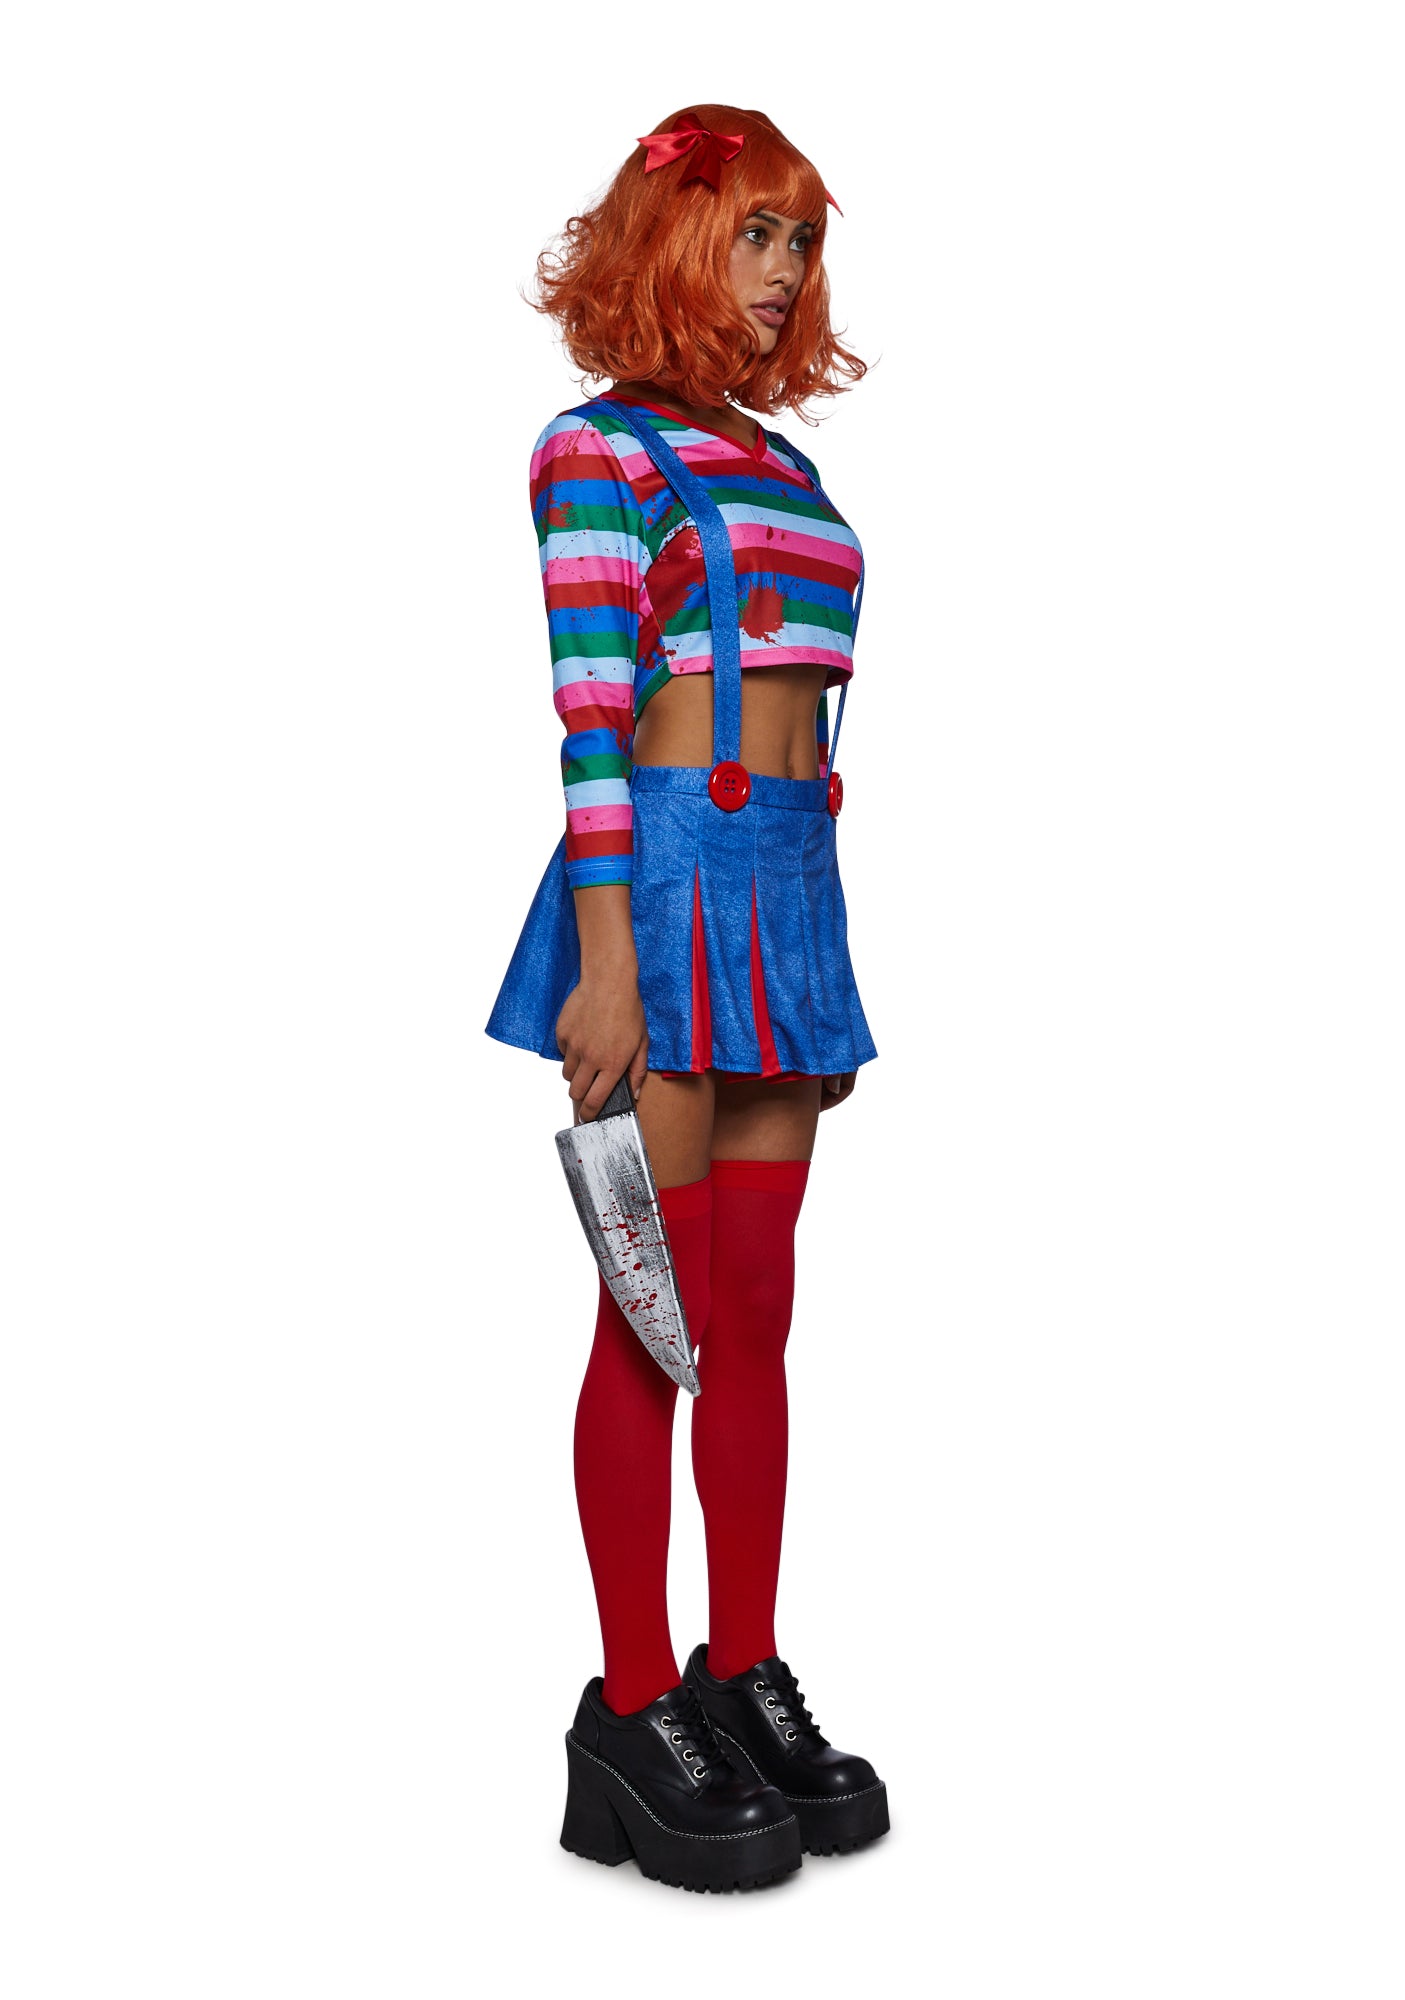 Sexy Chucky Female Costume – Dolls Kill